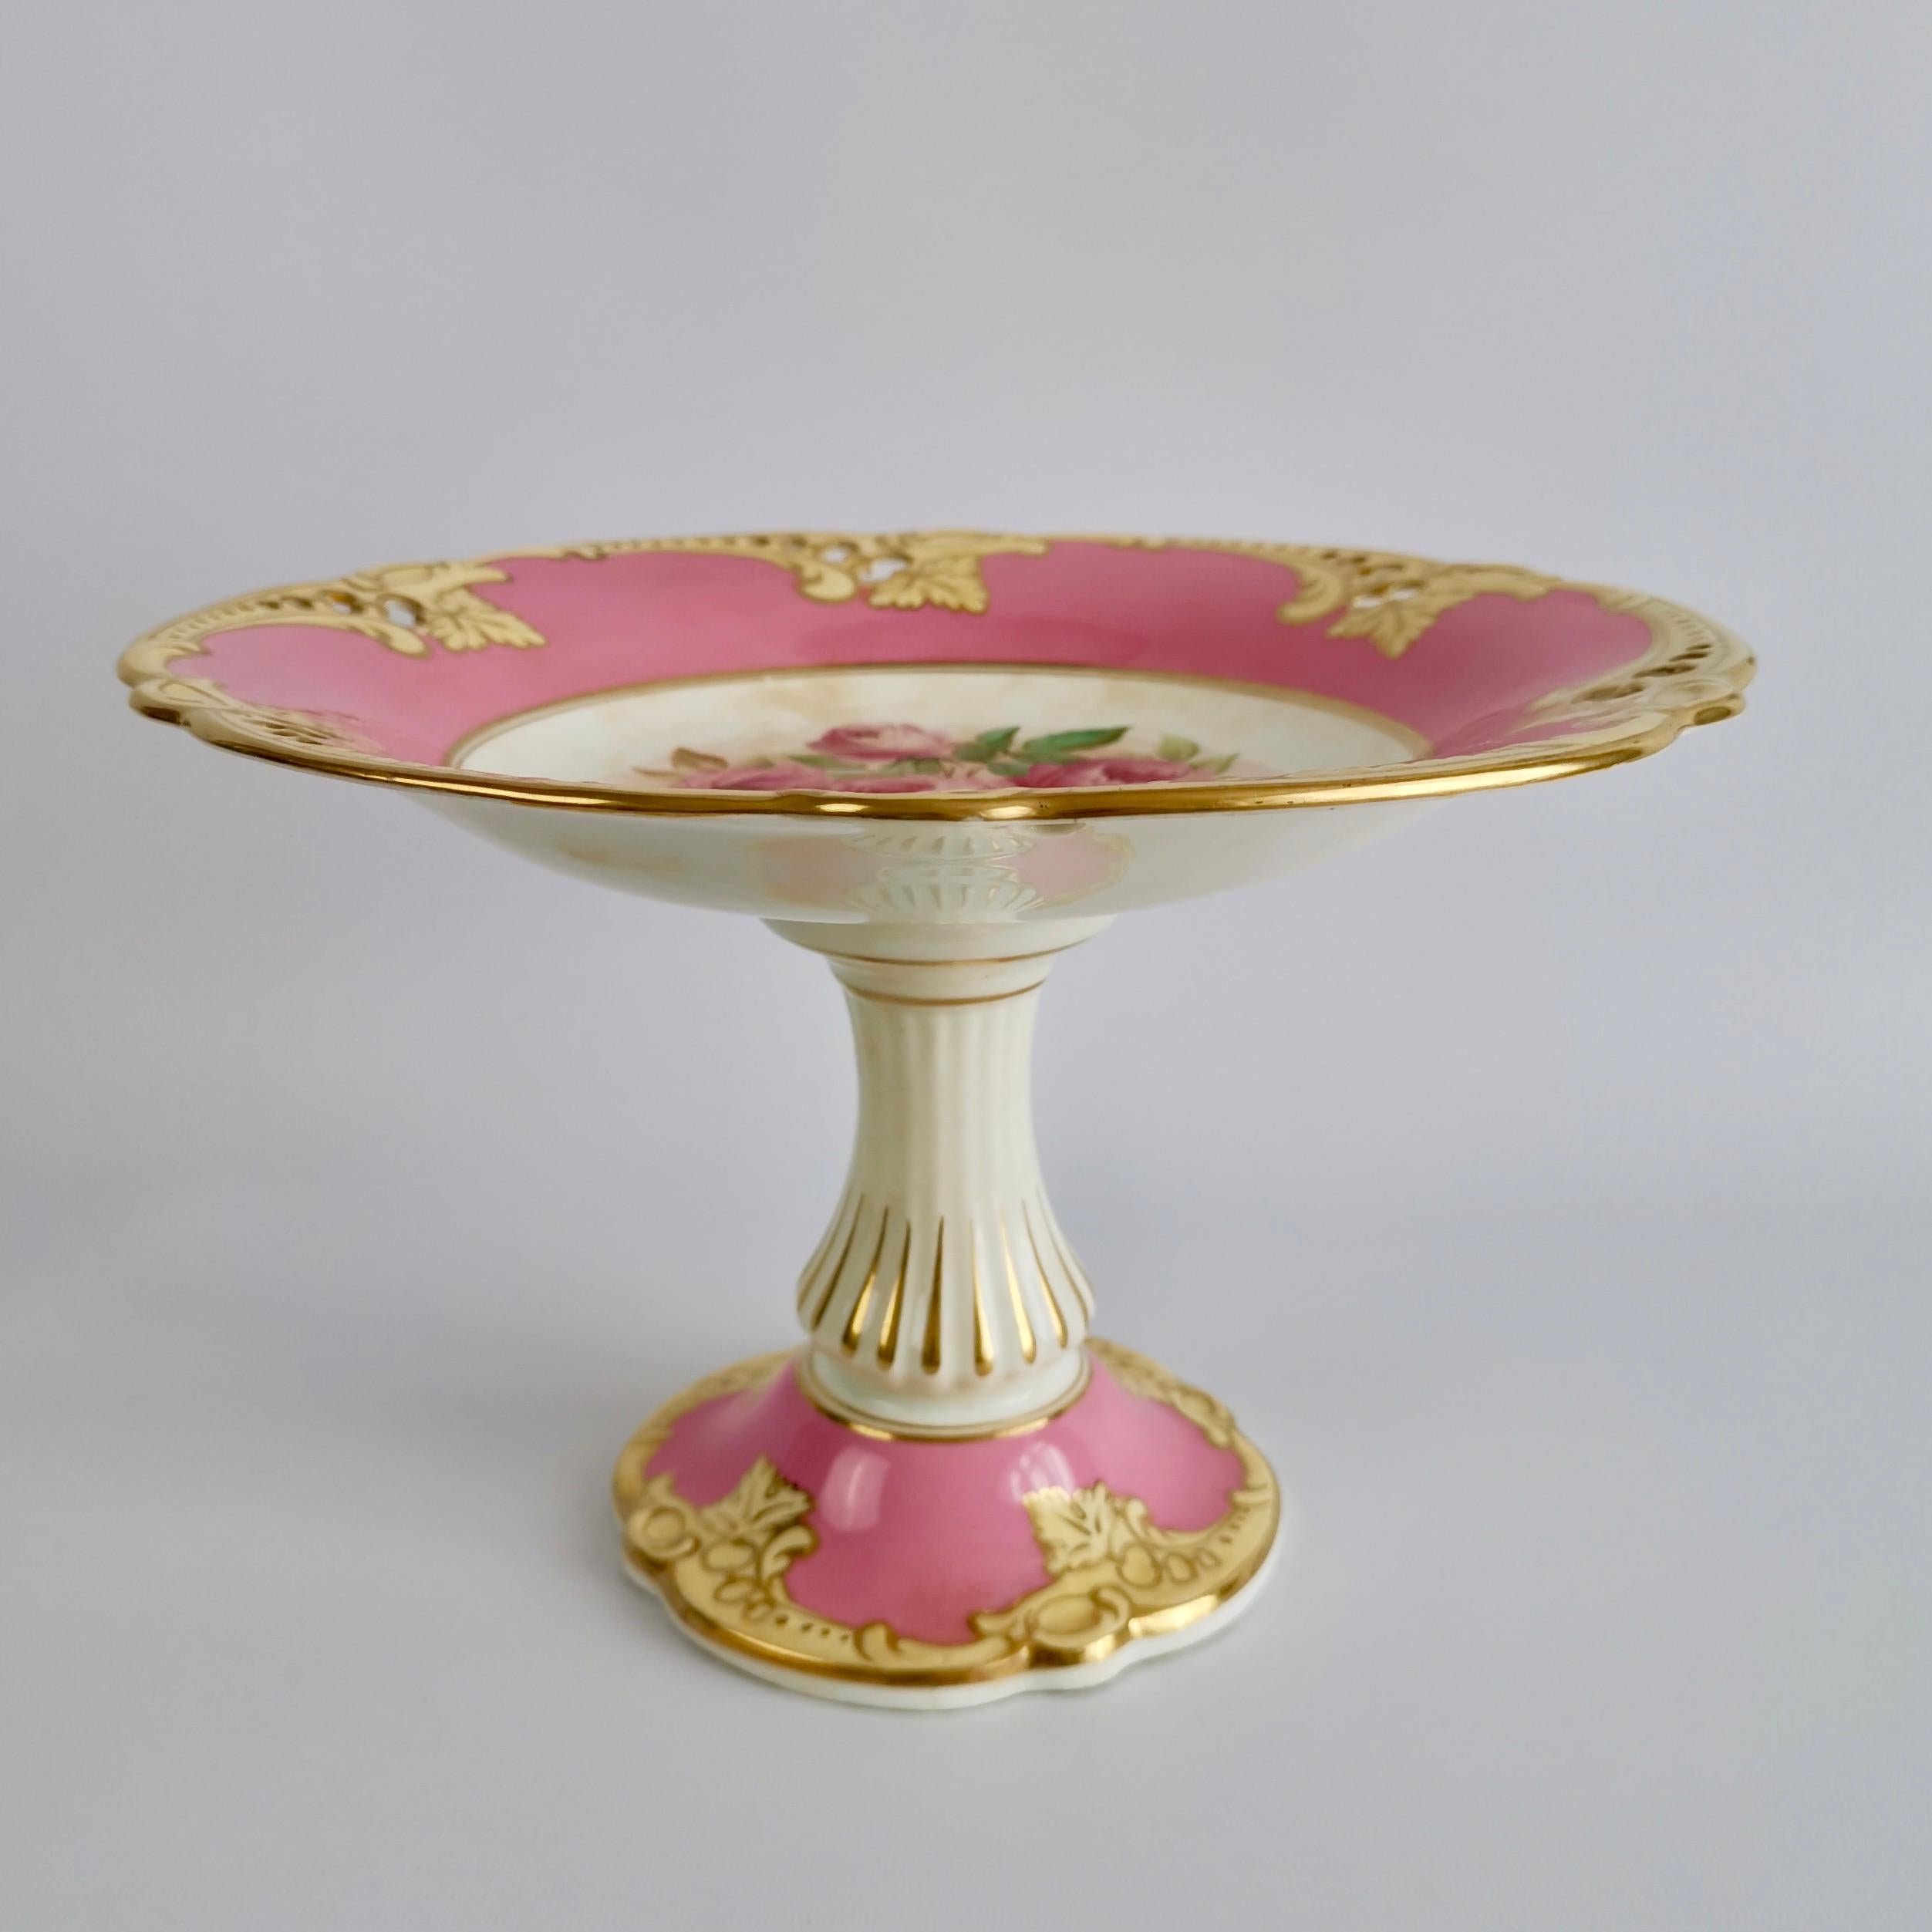 Victorian Brown Westhead & Moore Porcelain Dessert Service, Hot Pink Botanical, circa 1860